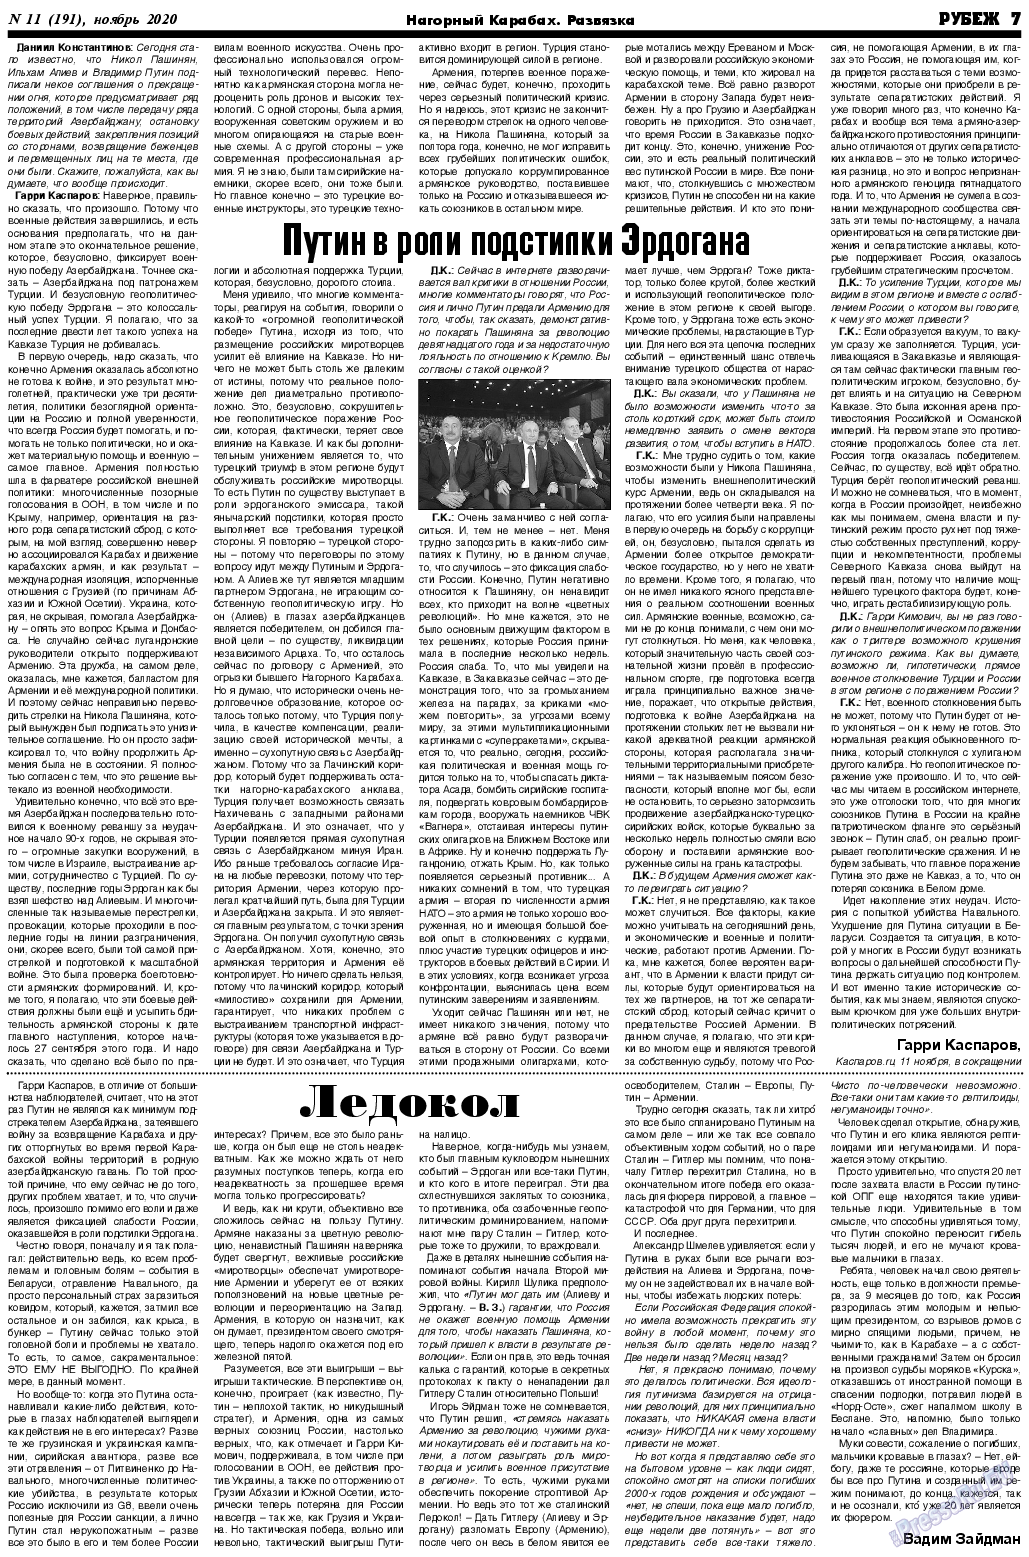 Рубеж, газета. 2020 №11 стр.7